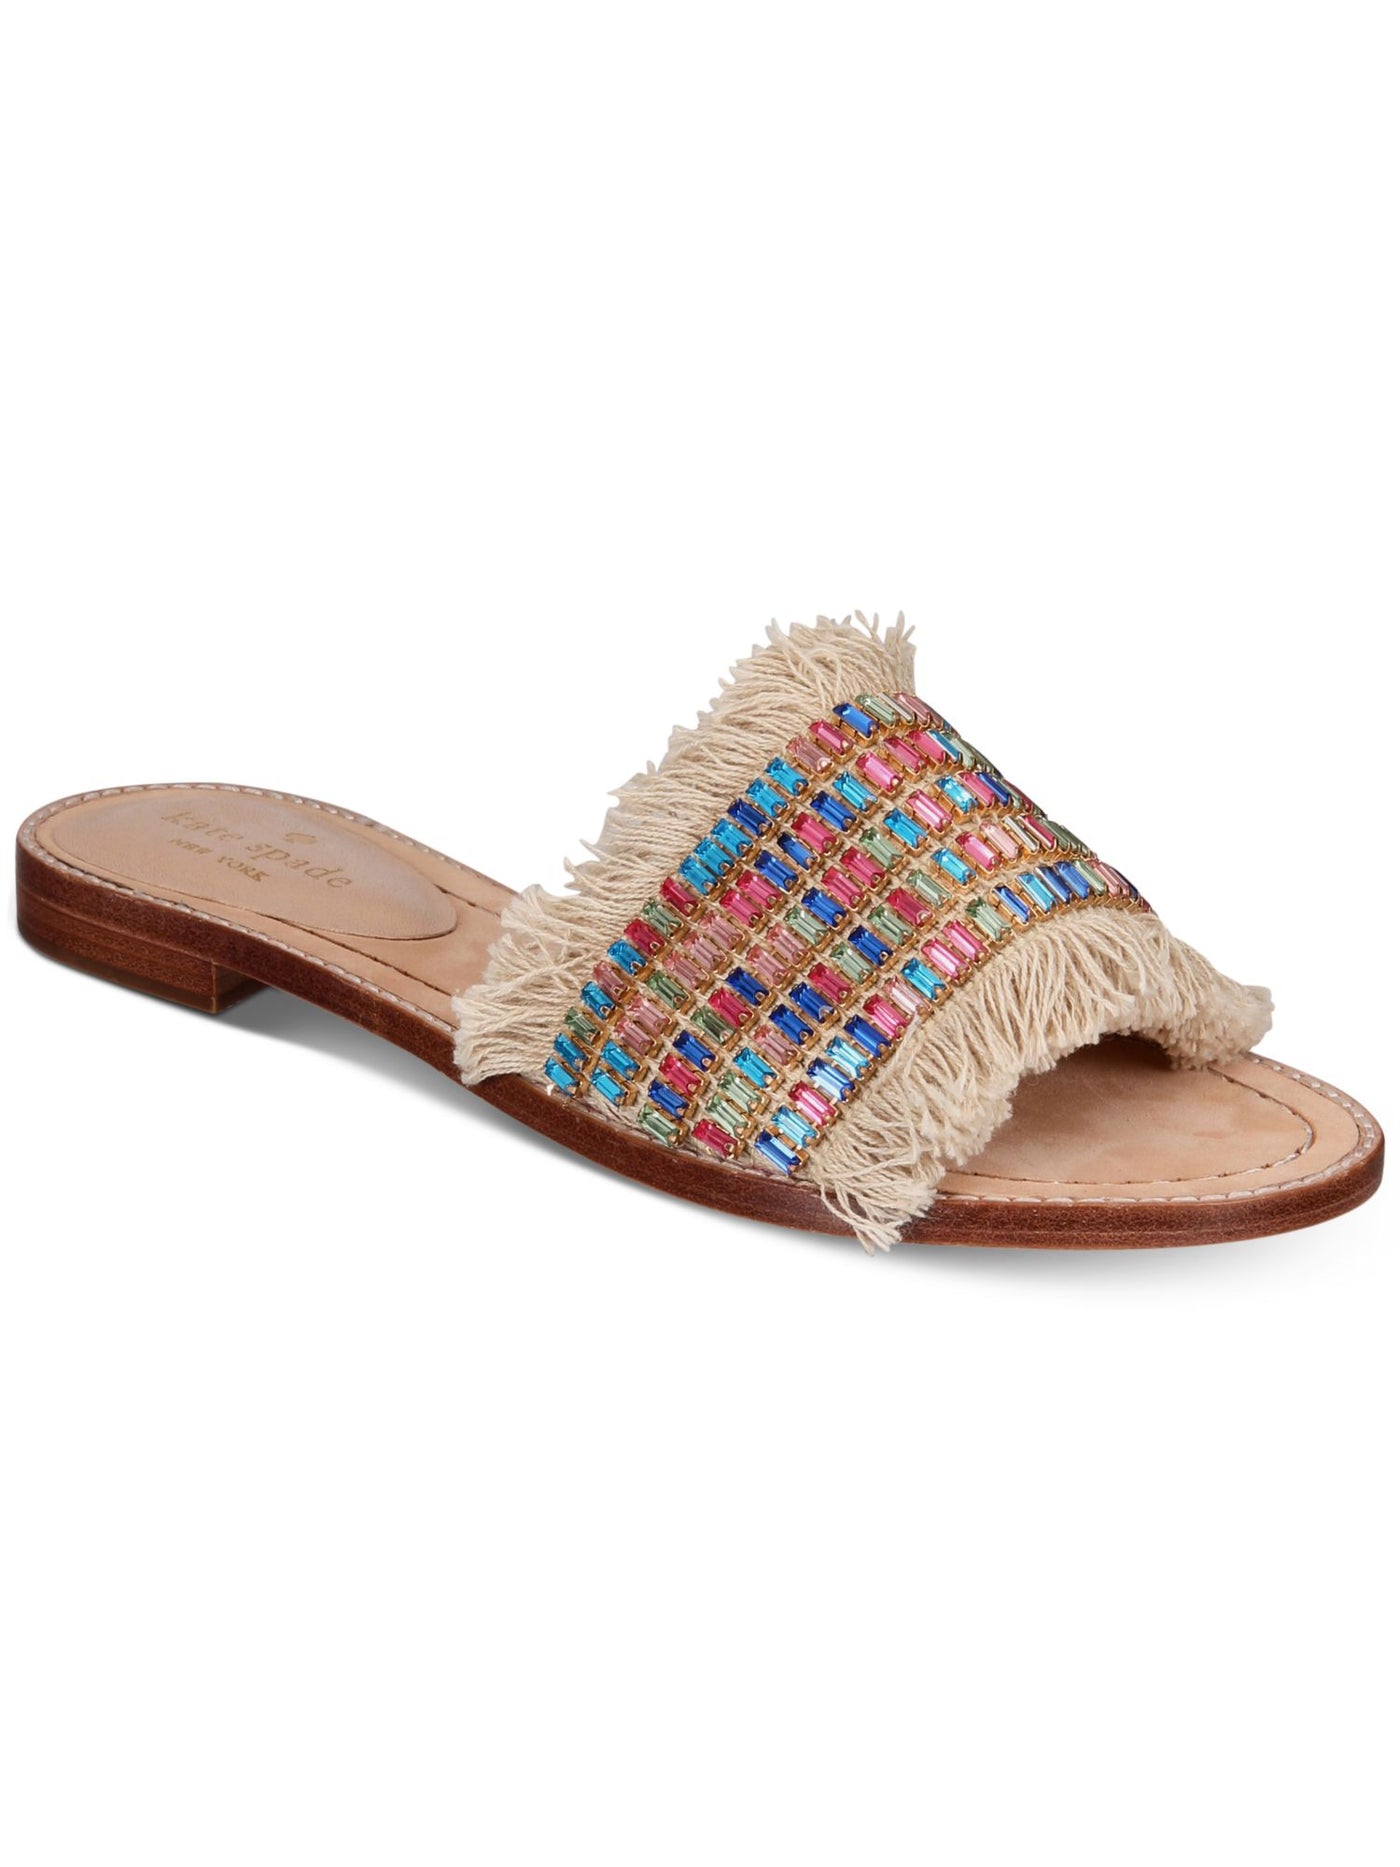 KATE SPADE NEW YORK Womens Beige Embellished Frayed Solaina Round Toe Slip On Slide Sandals Shoes 8 M